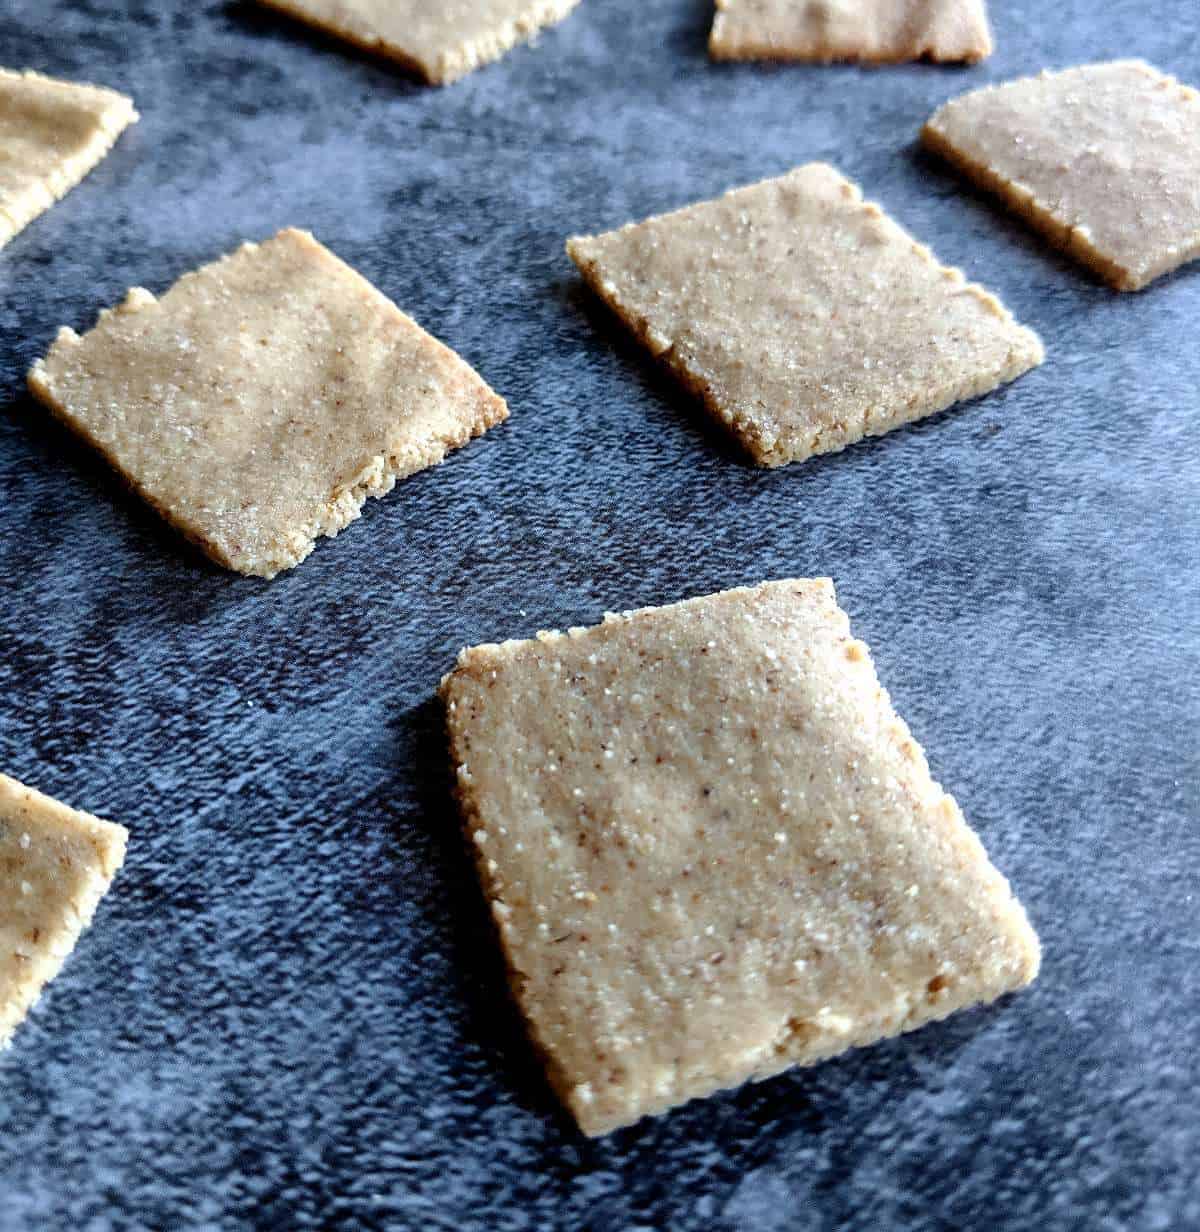 Tigernut and Almond Flour Crackers (Paleo)